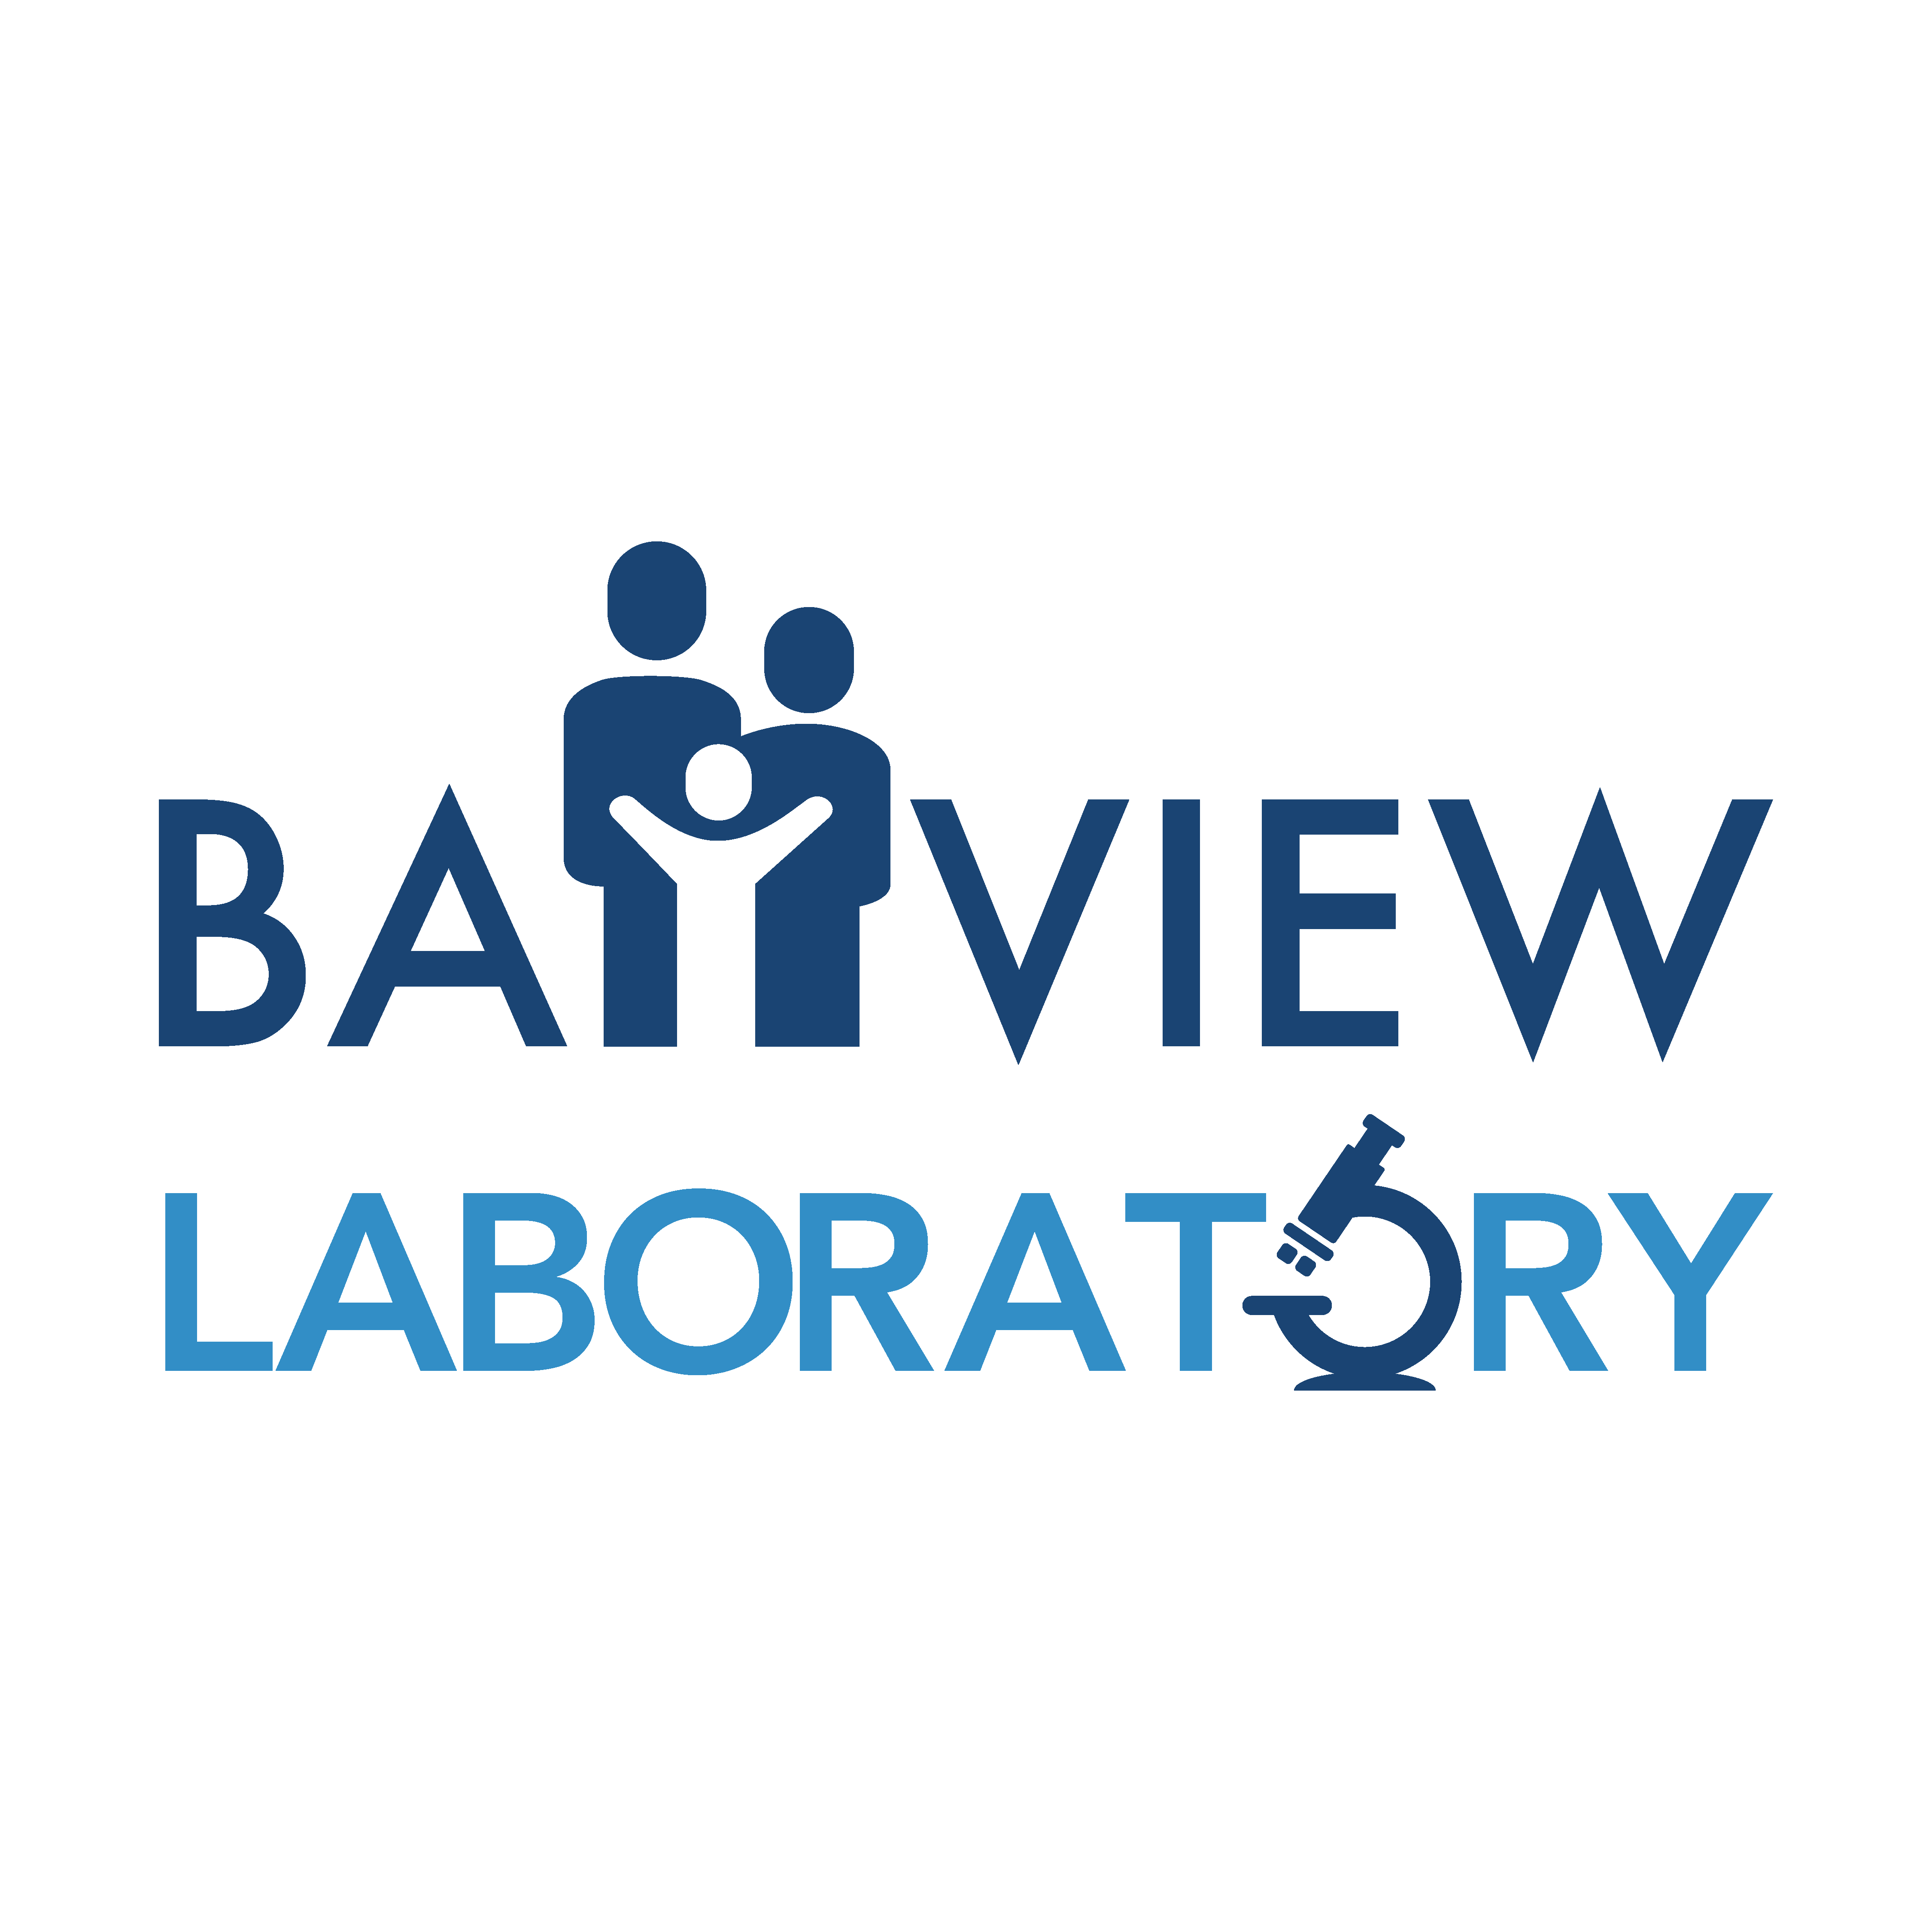 Bayview Laboratory